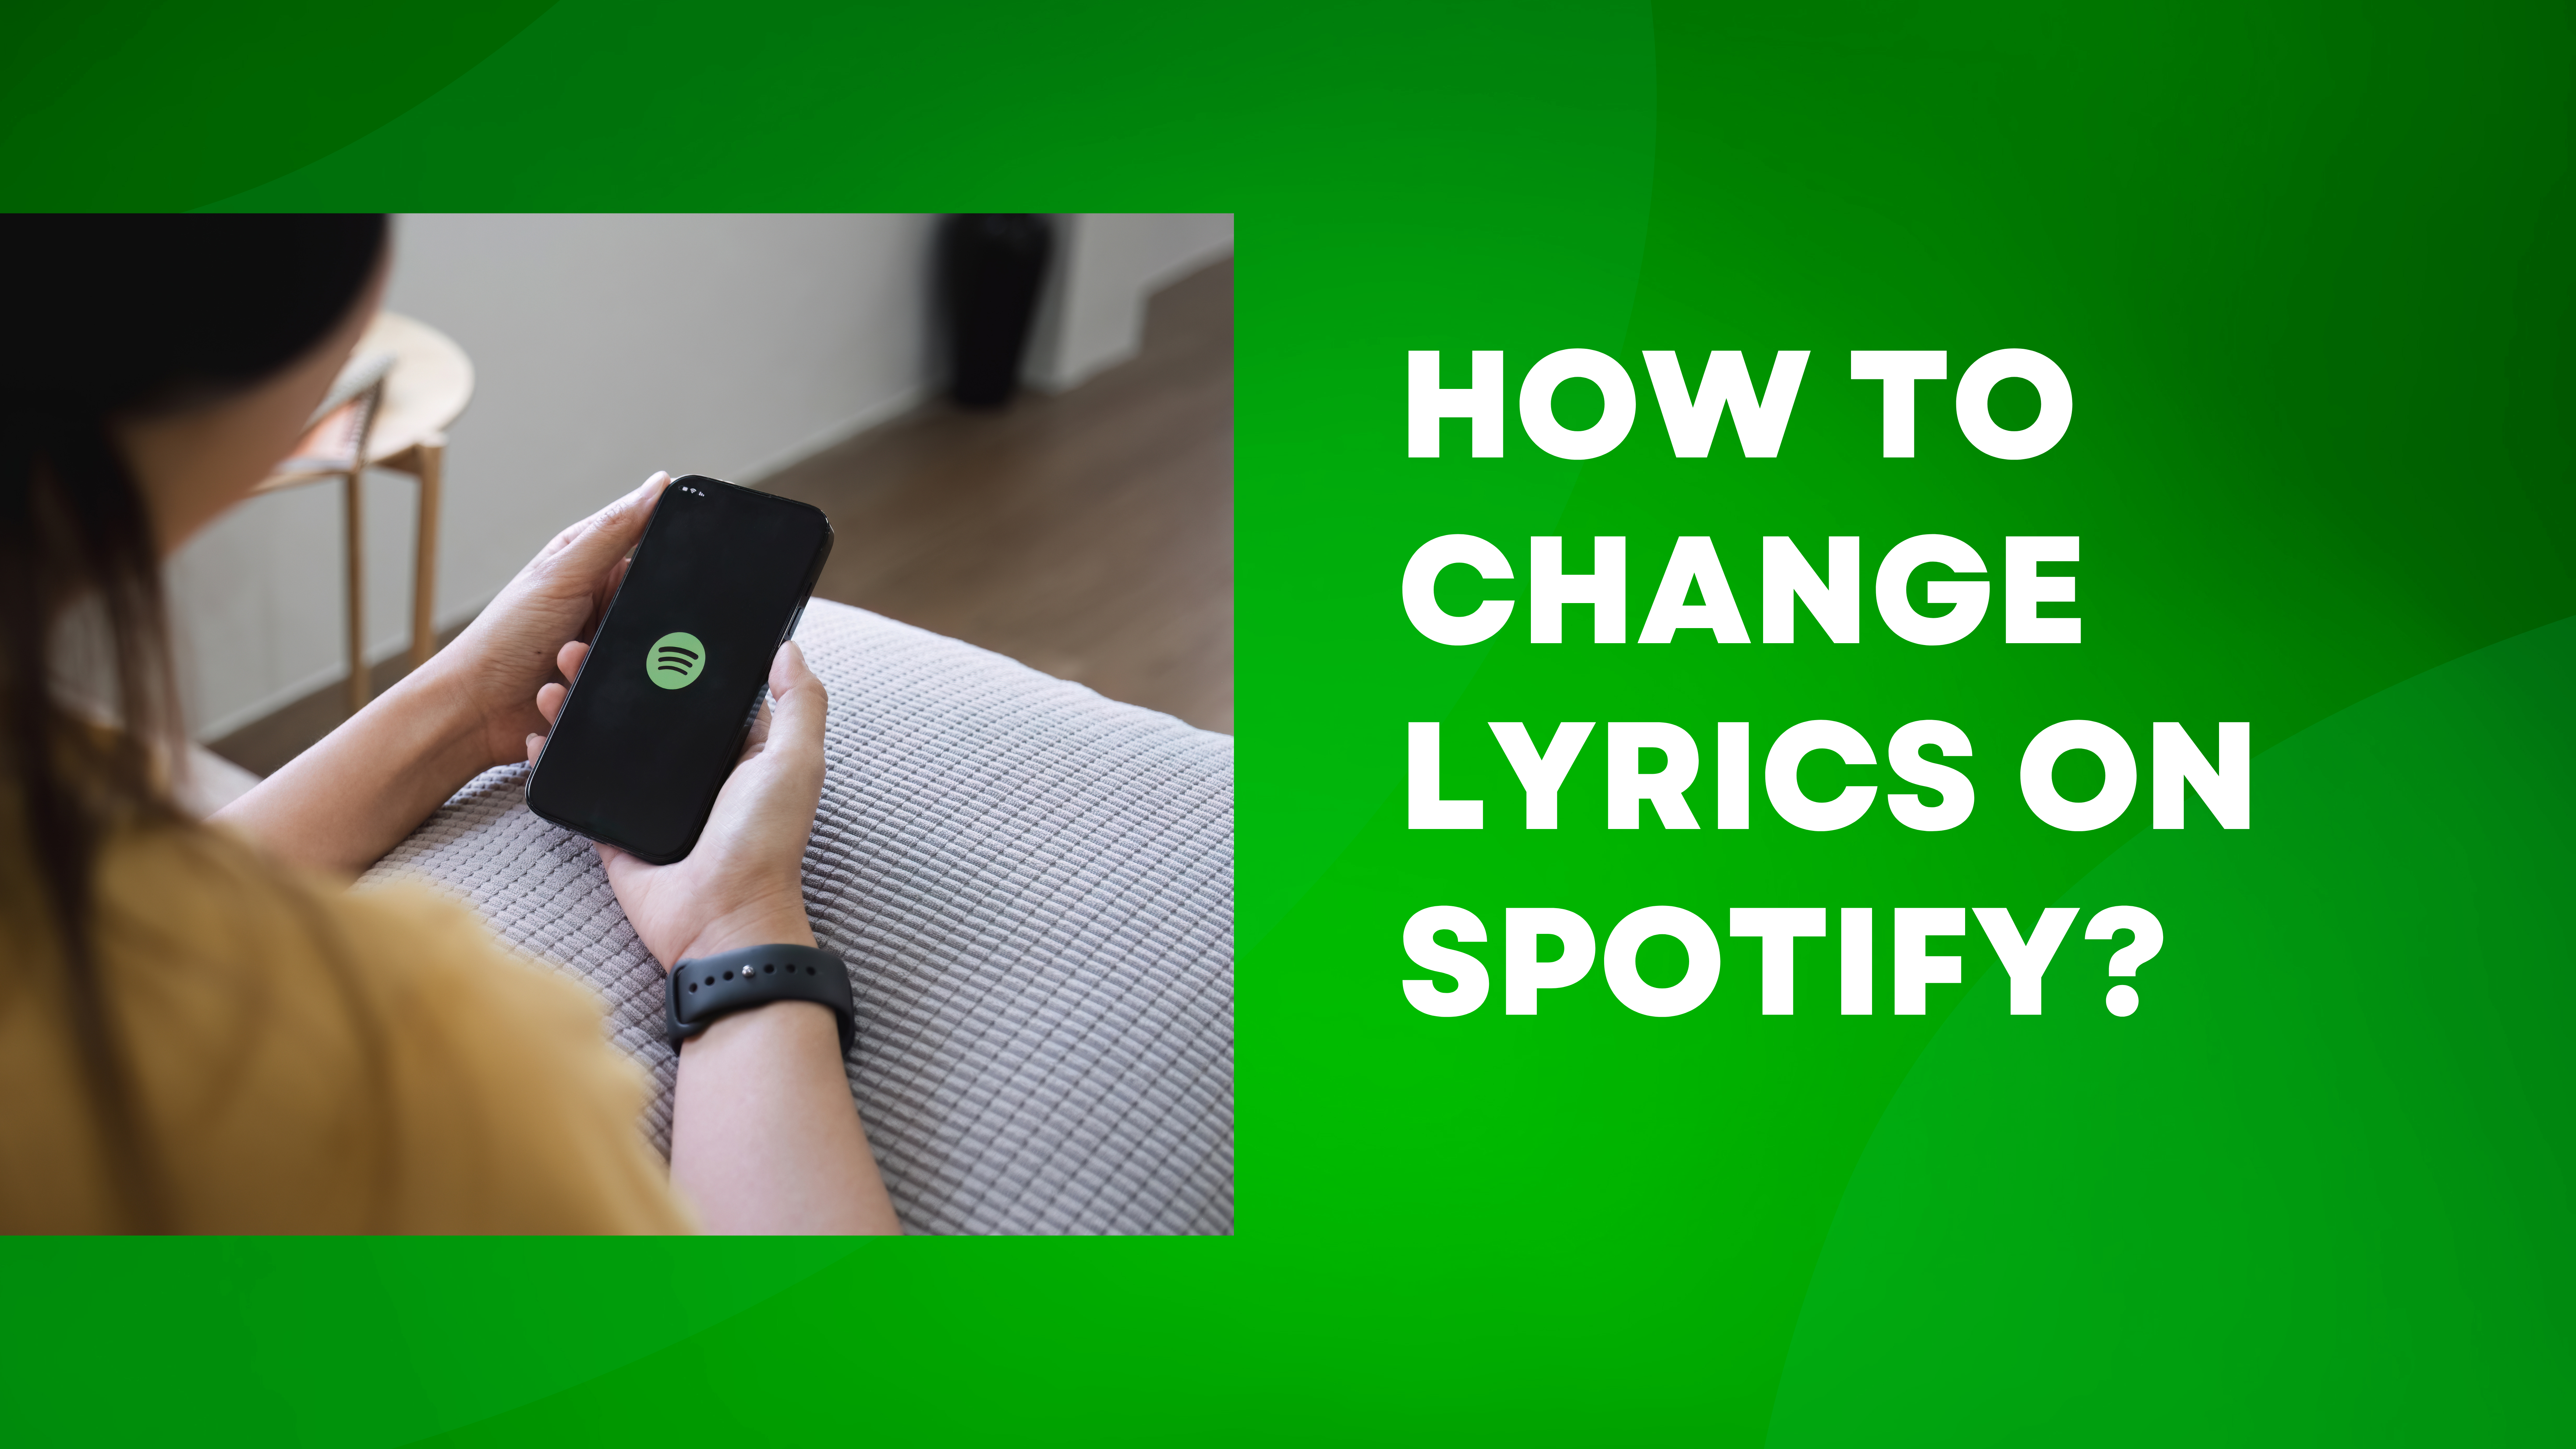 How to Change Lyrics on Spotify